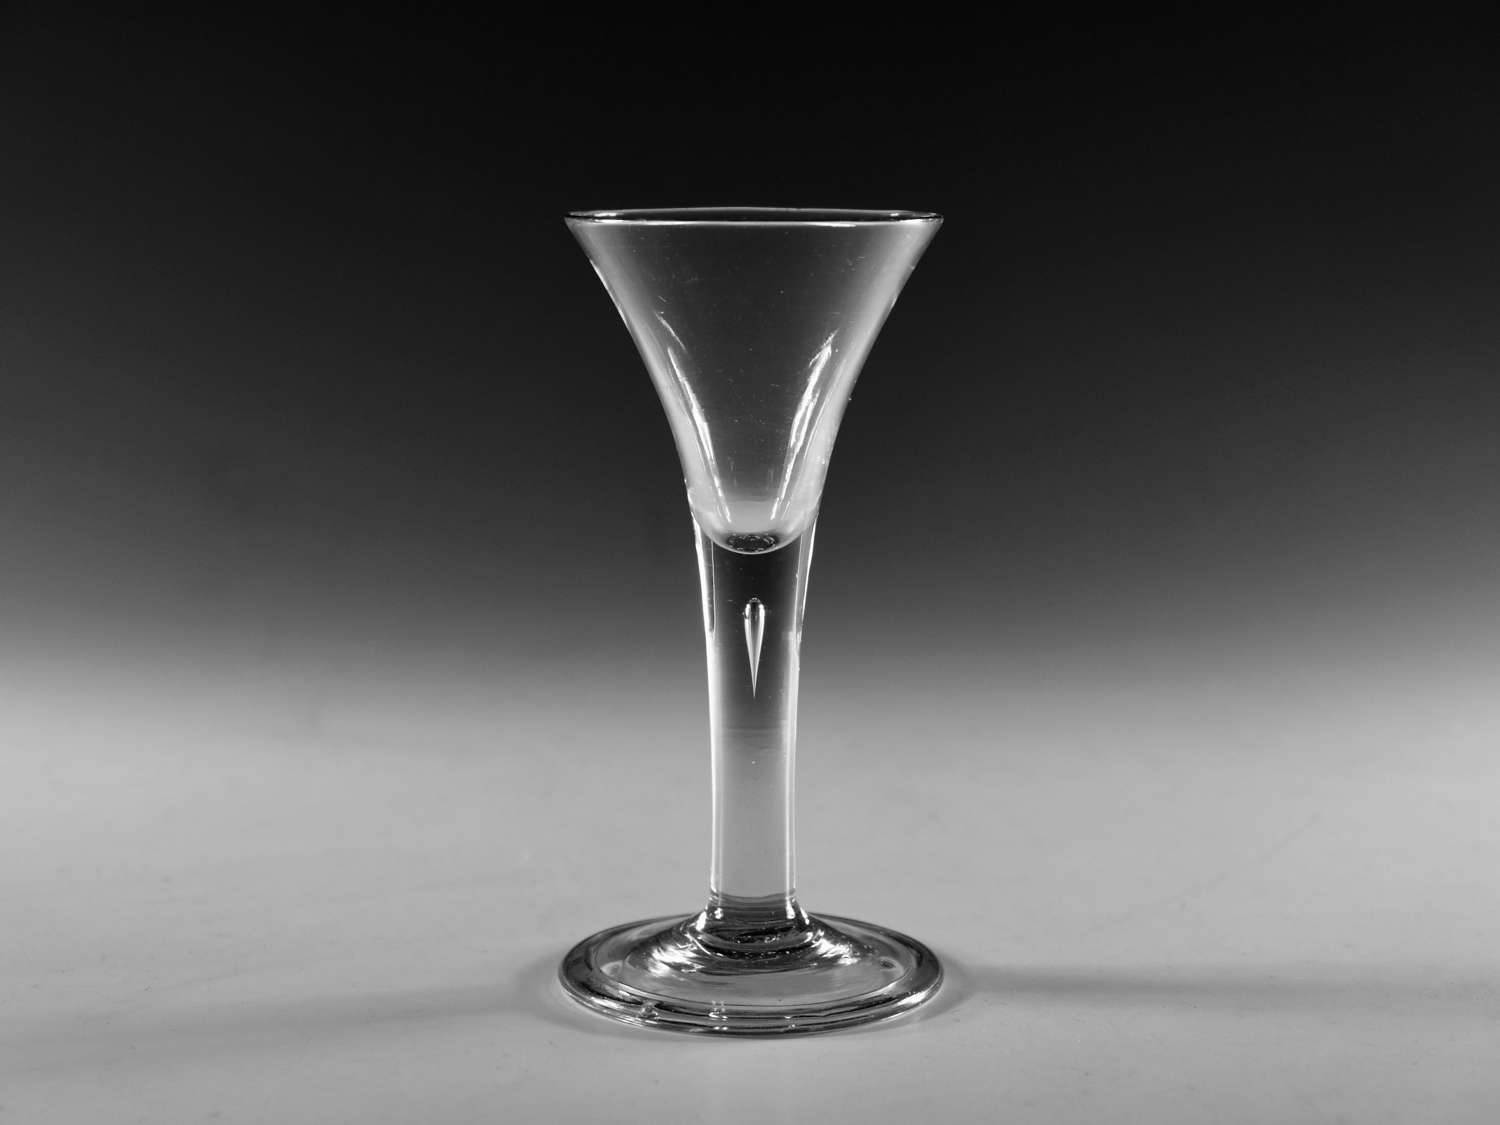 Antique glass - plain stem drawn trumpet wine glass c1760